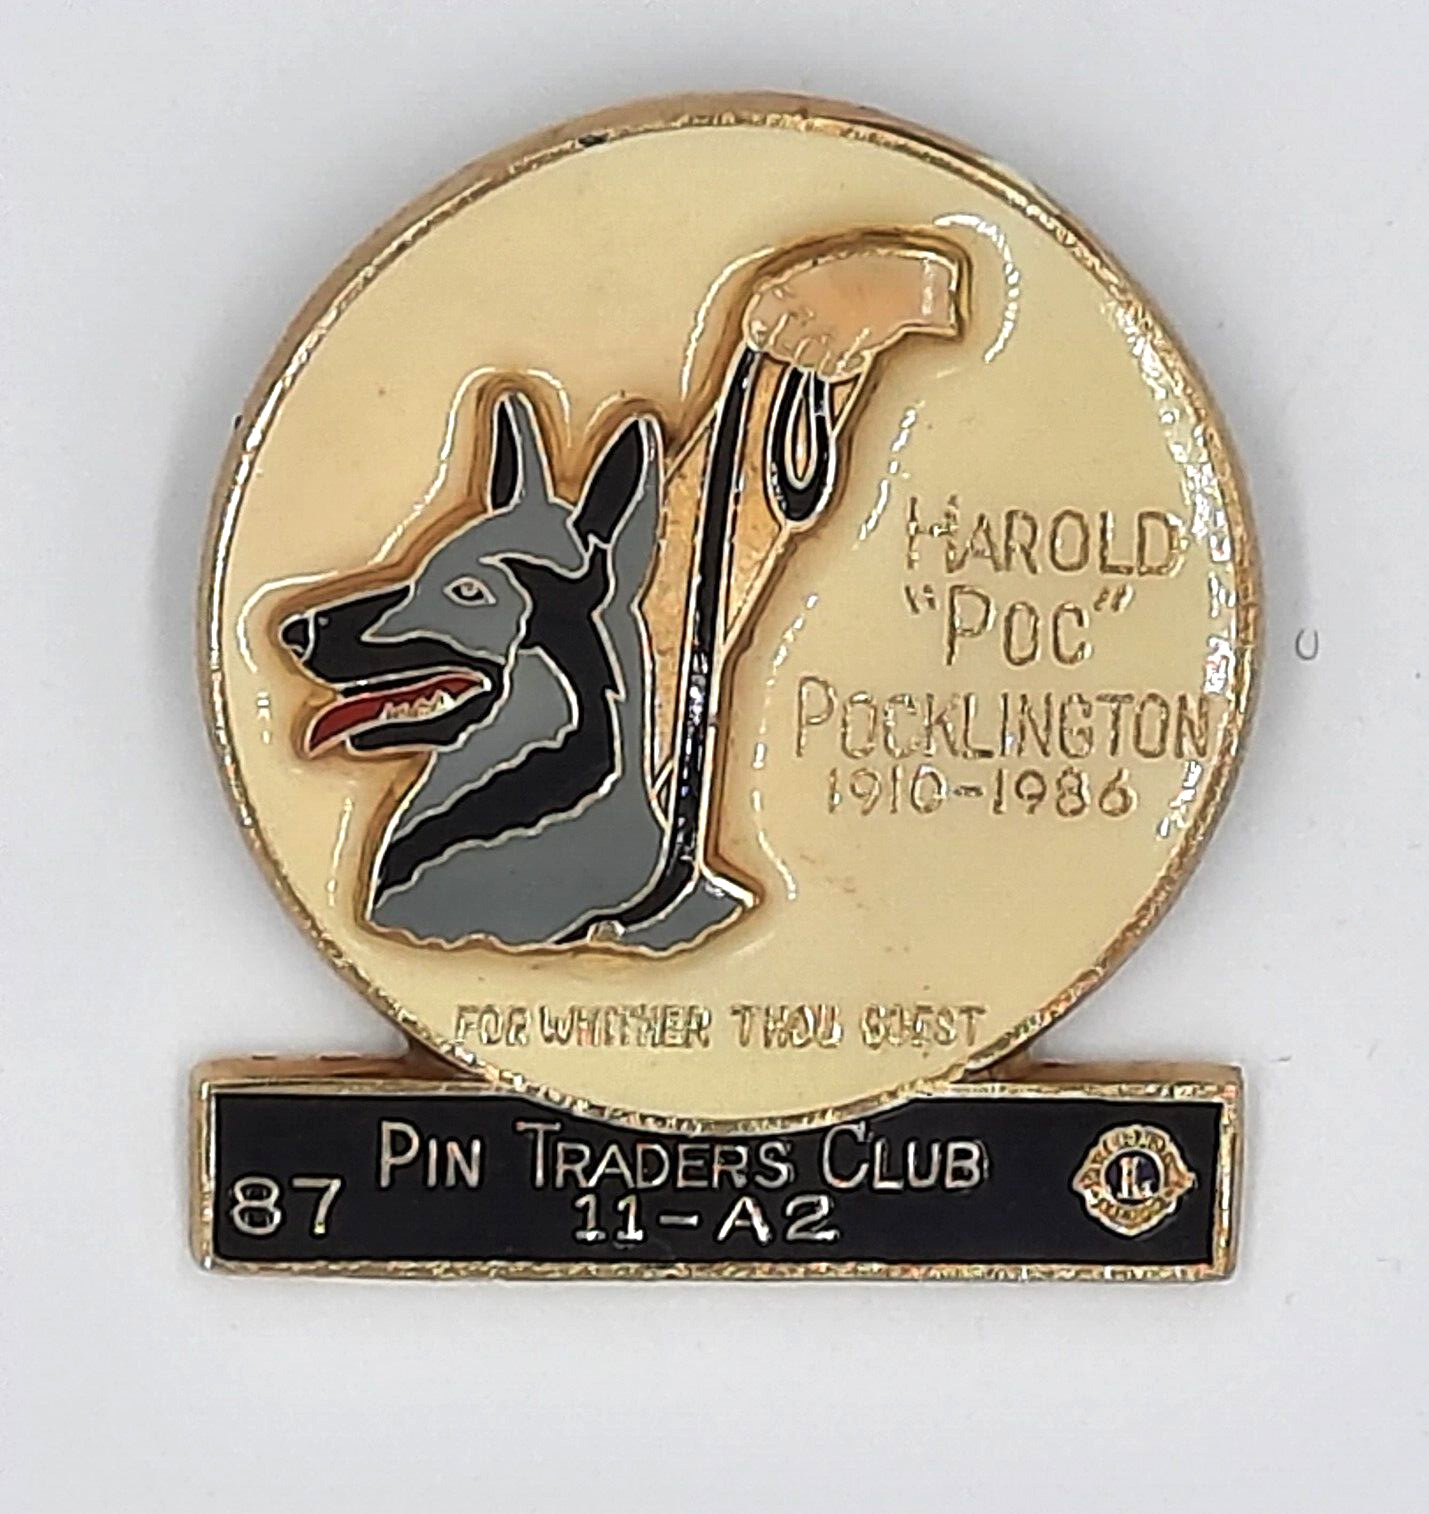 Algonac Lions Club Pin Harold Pockington 1910-1986 Michigan 11-A-2 Vintage